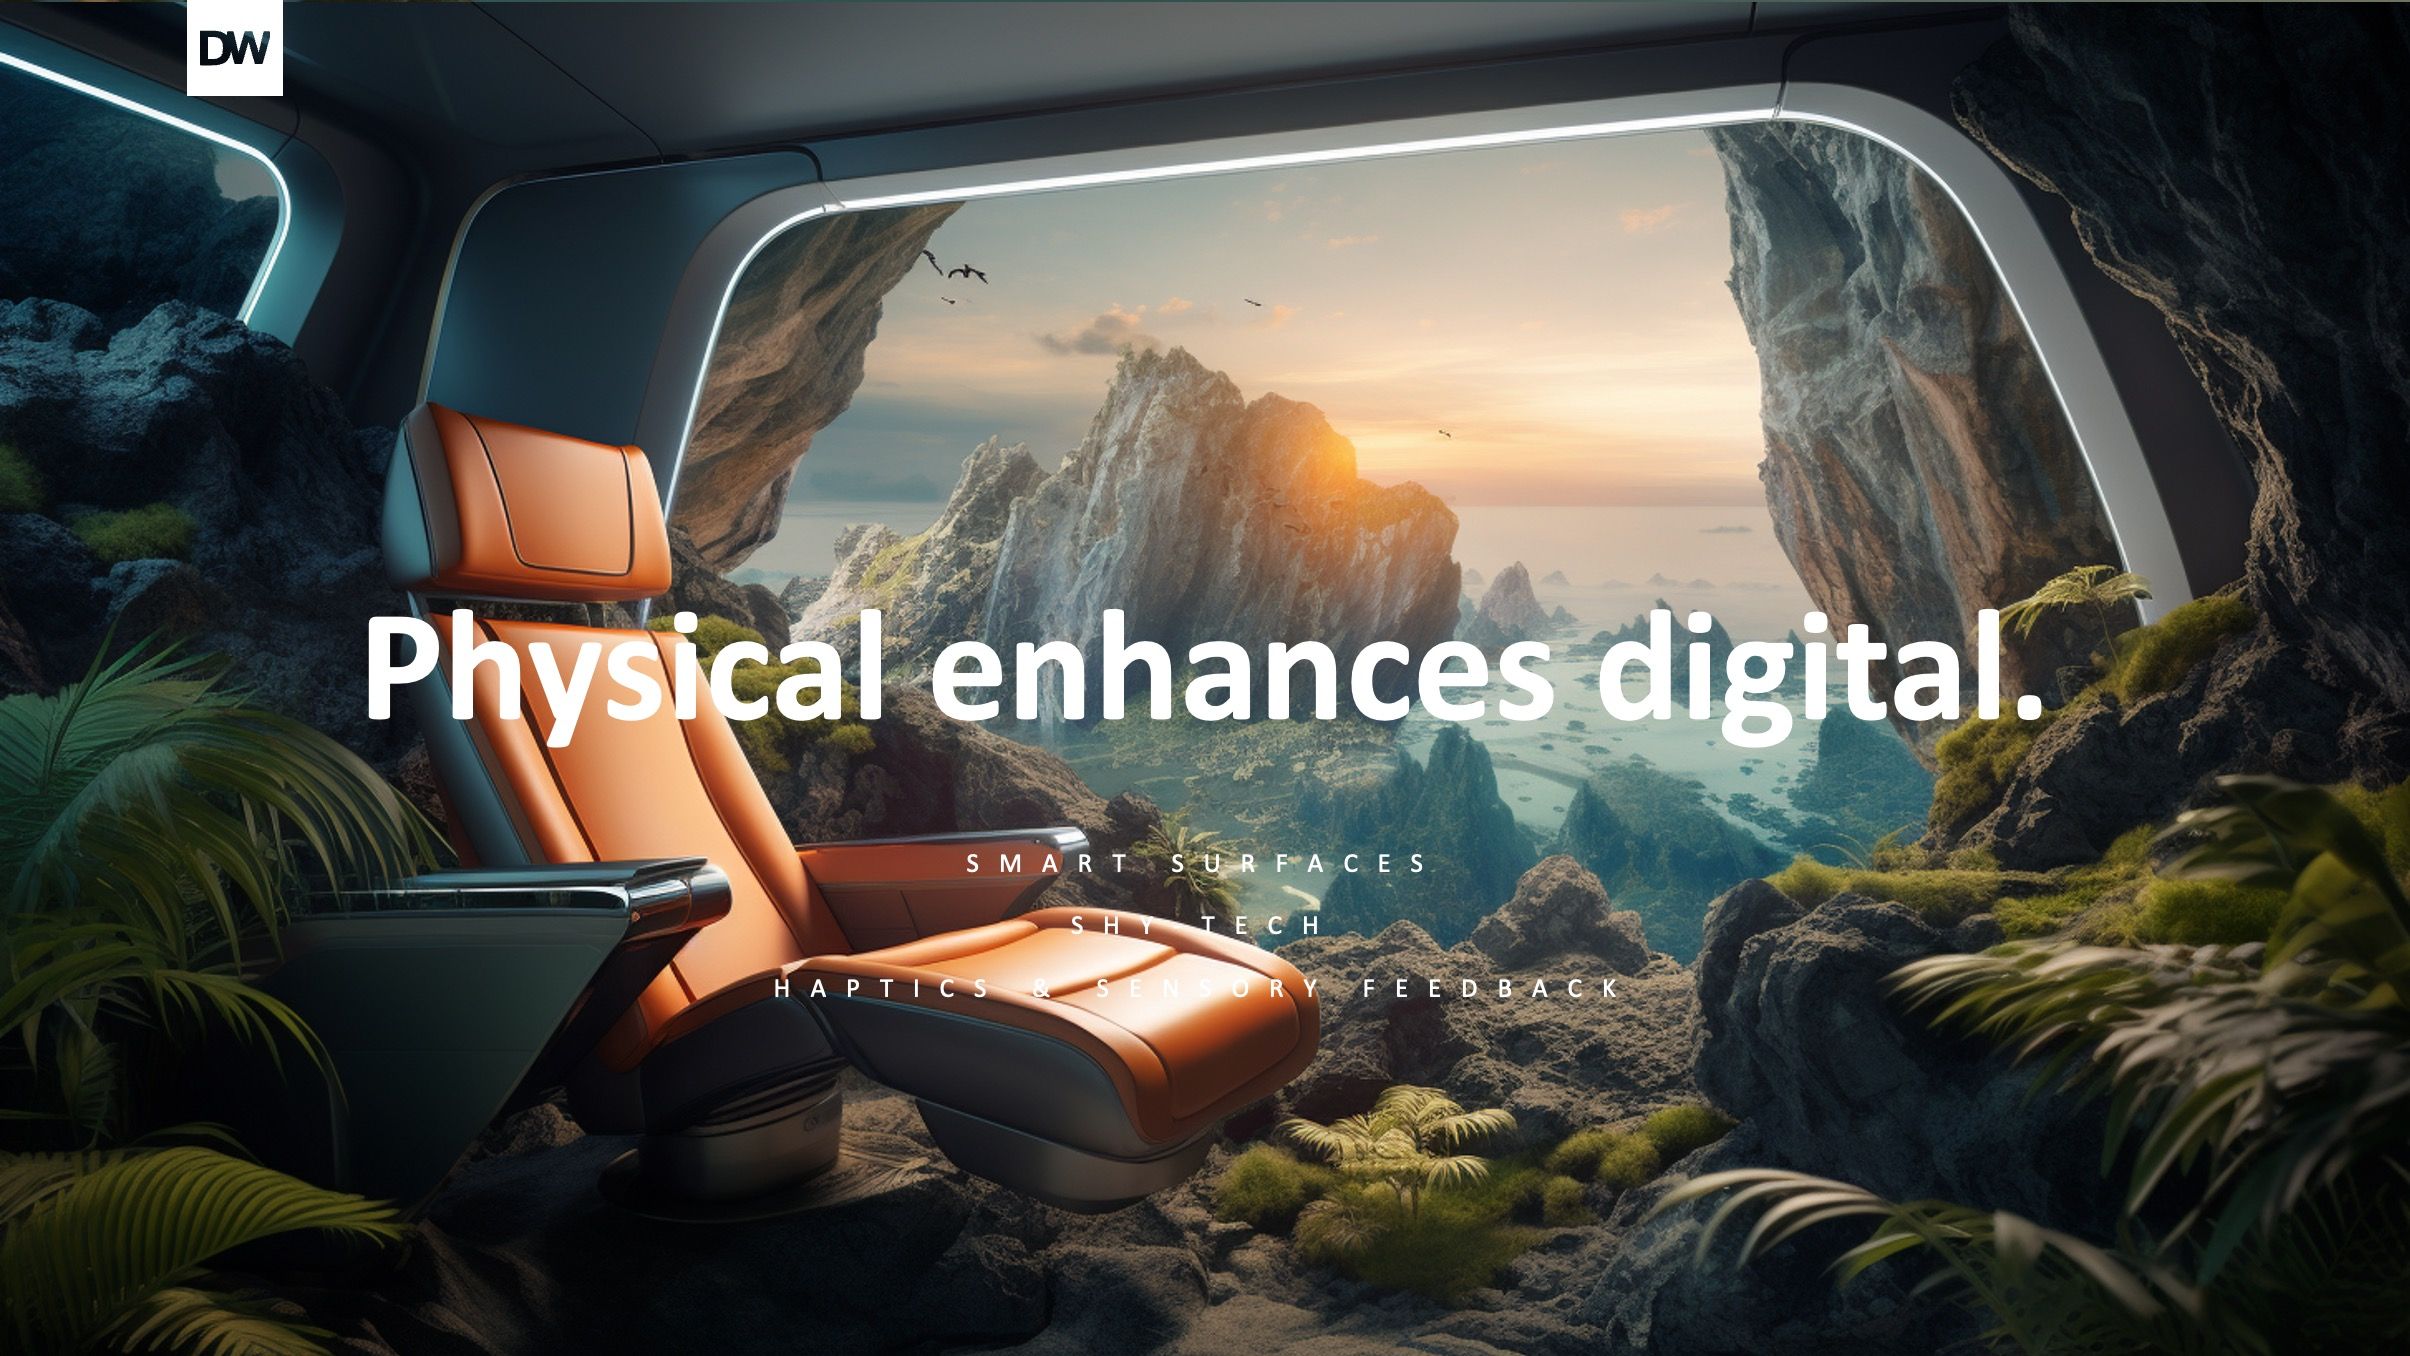 Physical enhances digital.